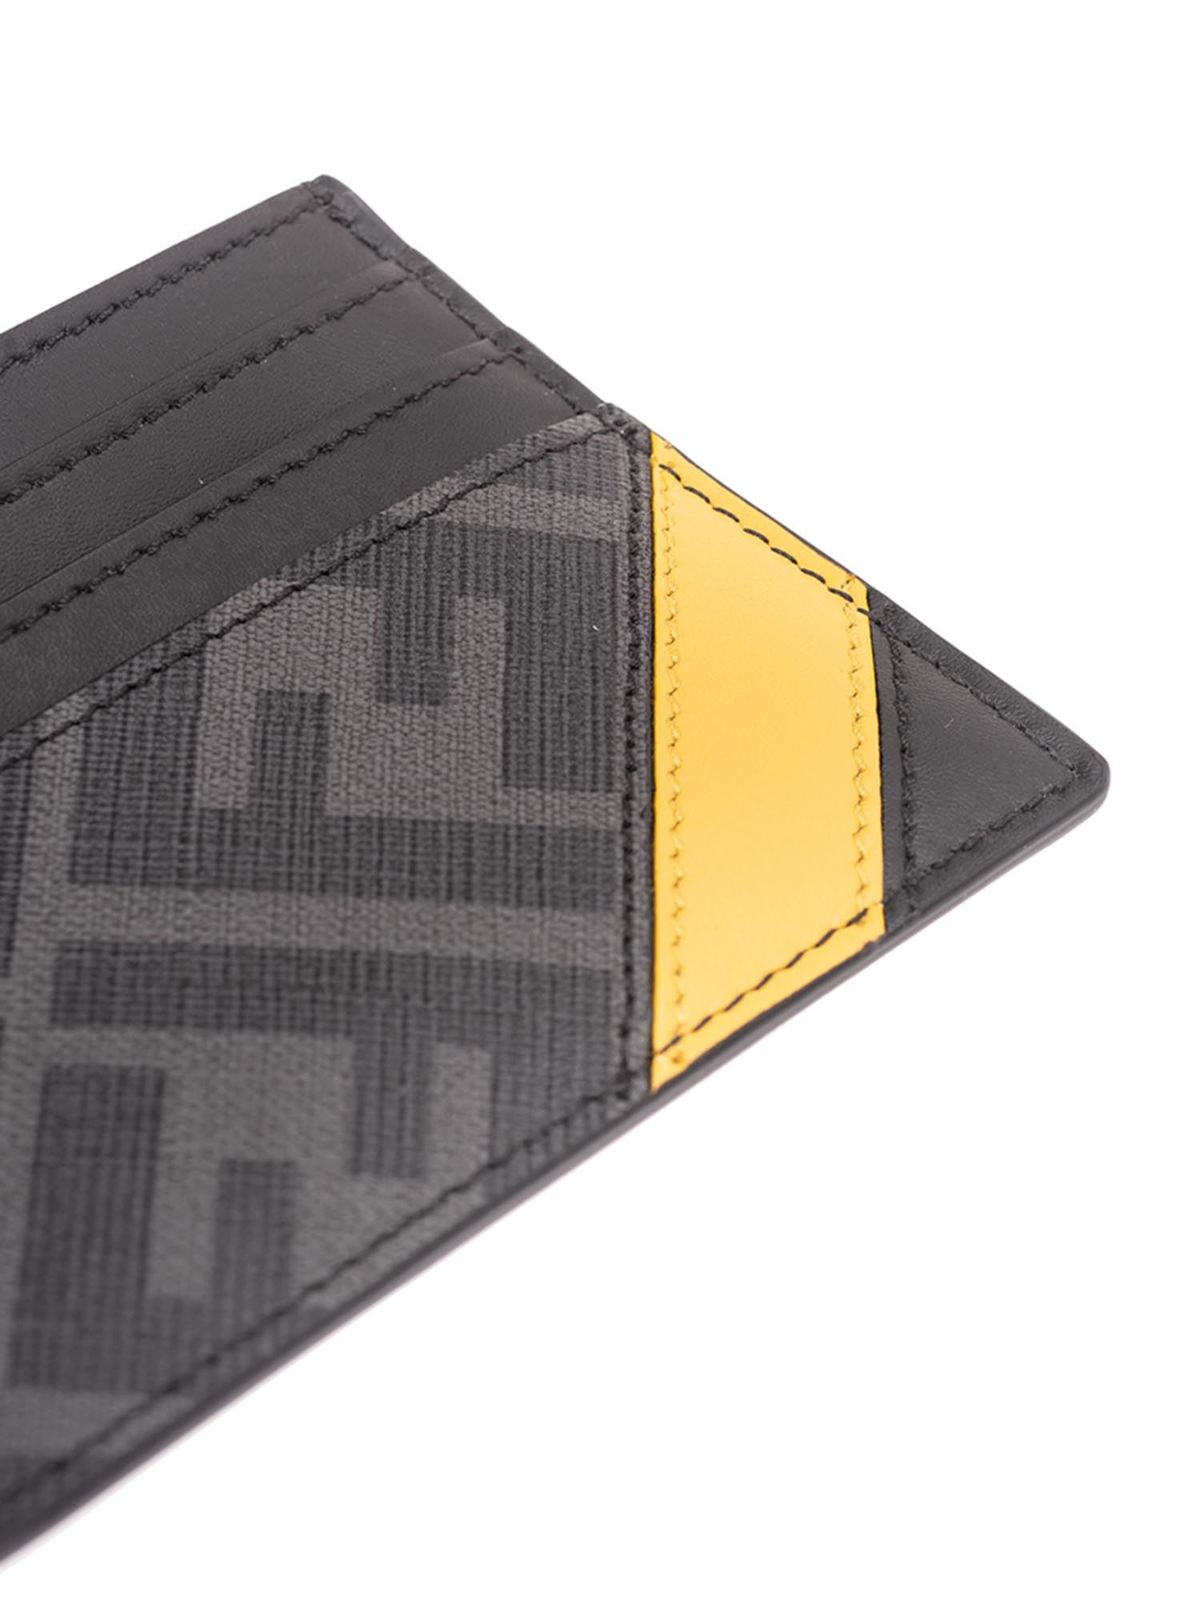 Wallets & purses Fendi - FF logo card holder in black and grey 